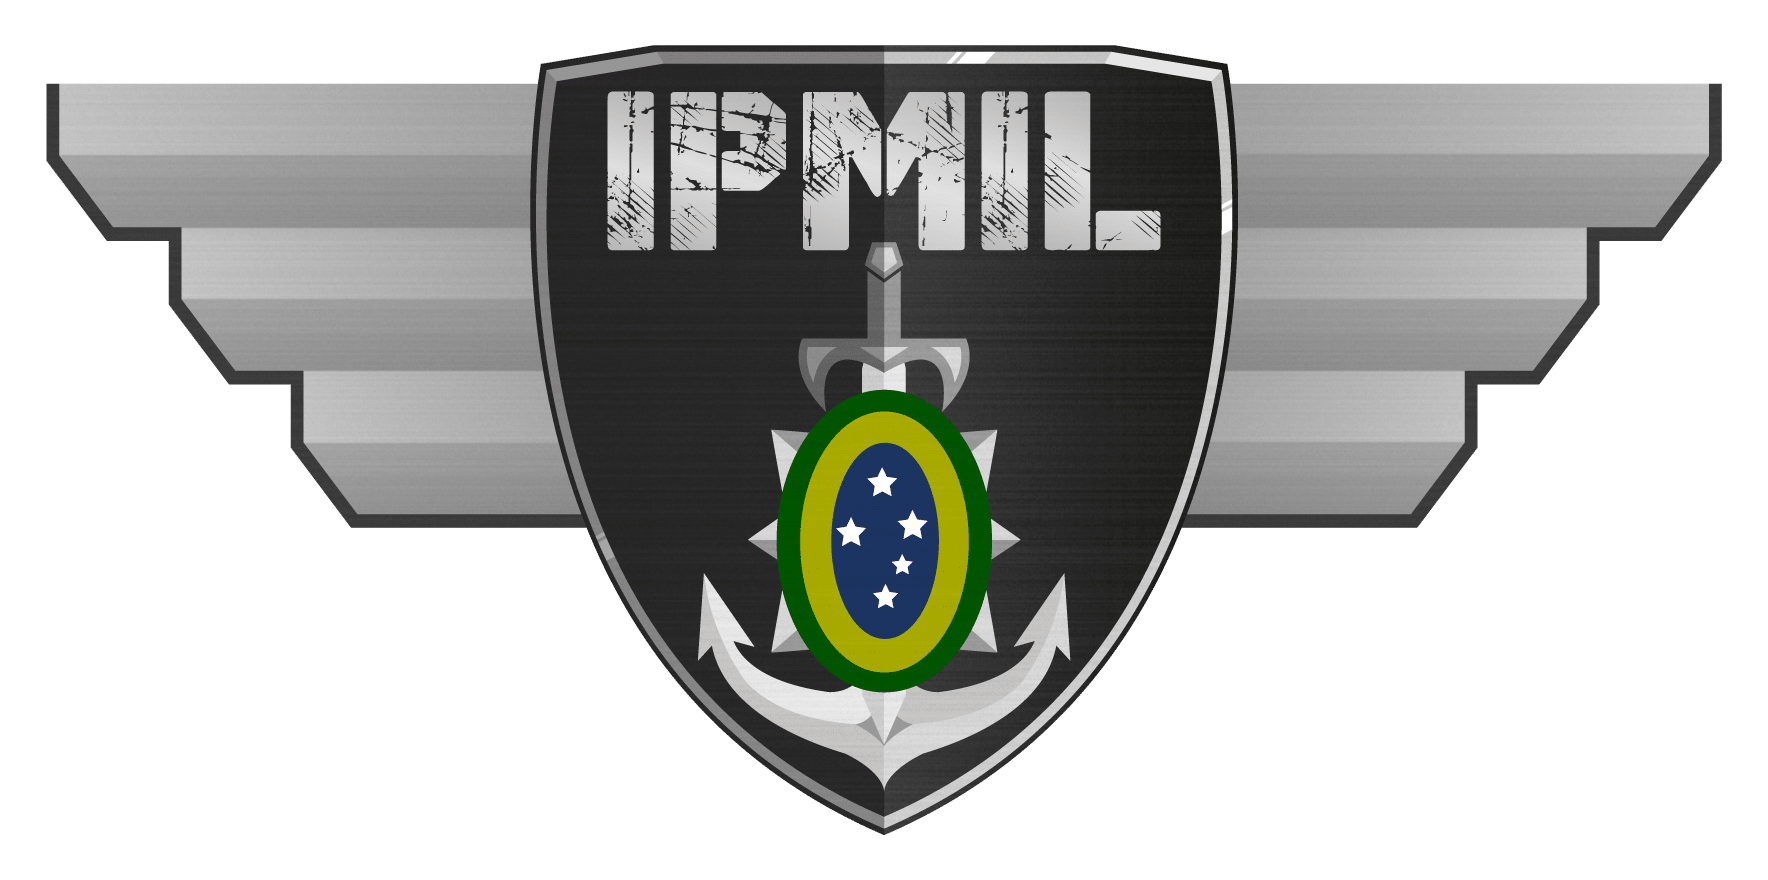 IPMIL – Instituto Padrão Militar Logotipo